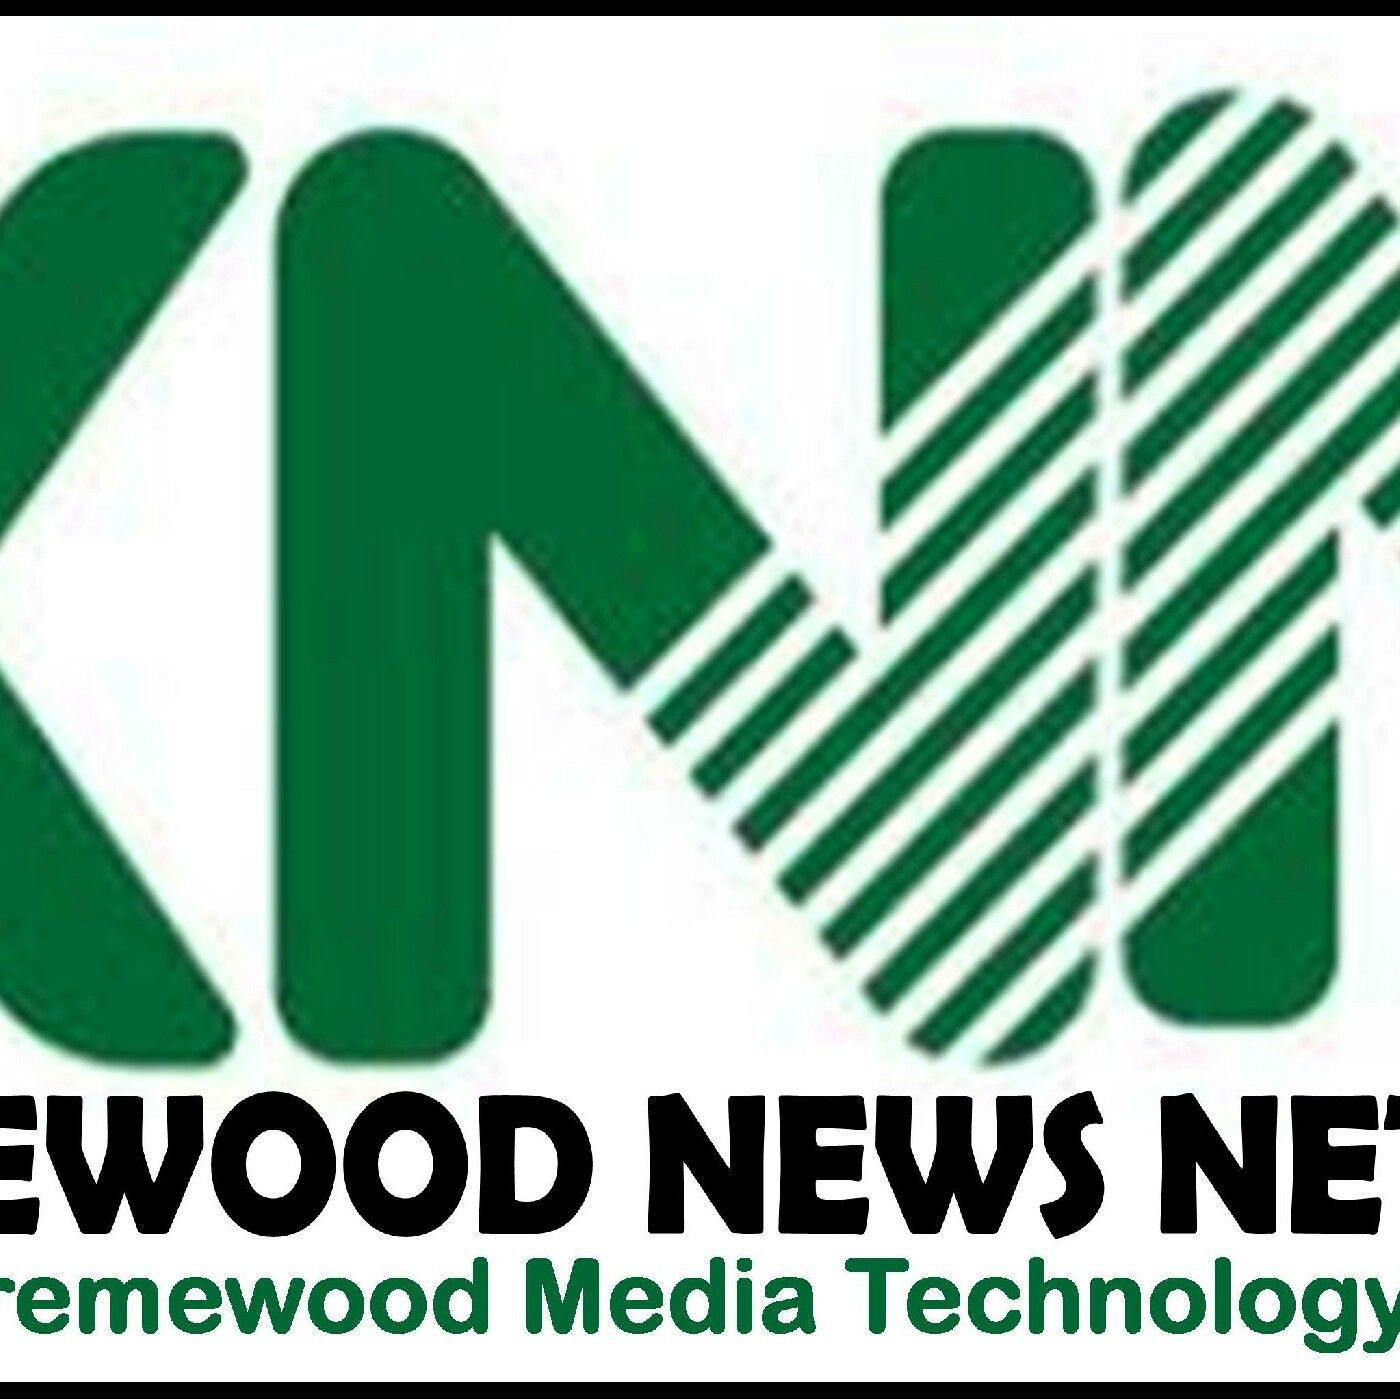 October 1, 2021 News - XNN Studio